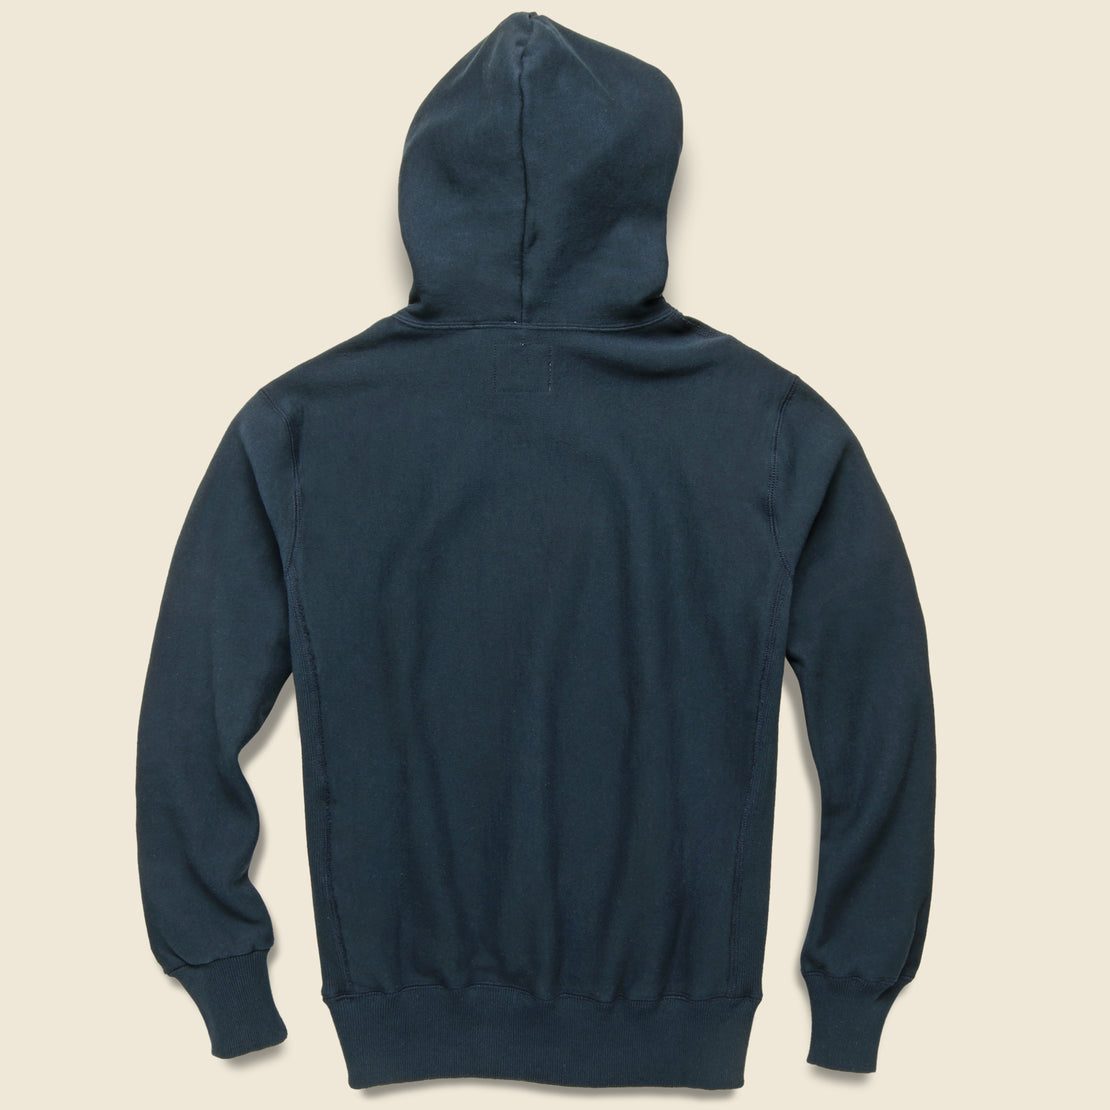 Todd Snyder + Champion - Popover Hoodie Sweatshirt - Original Navy - Todd Snyder - STAG Provisions - Tops - Fleece / Sweatshirt